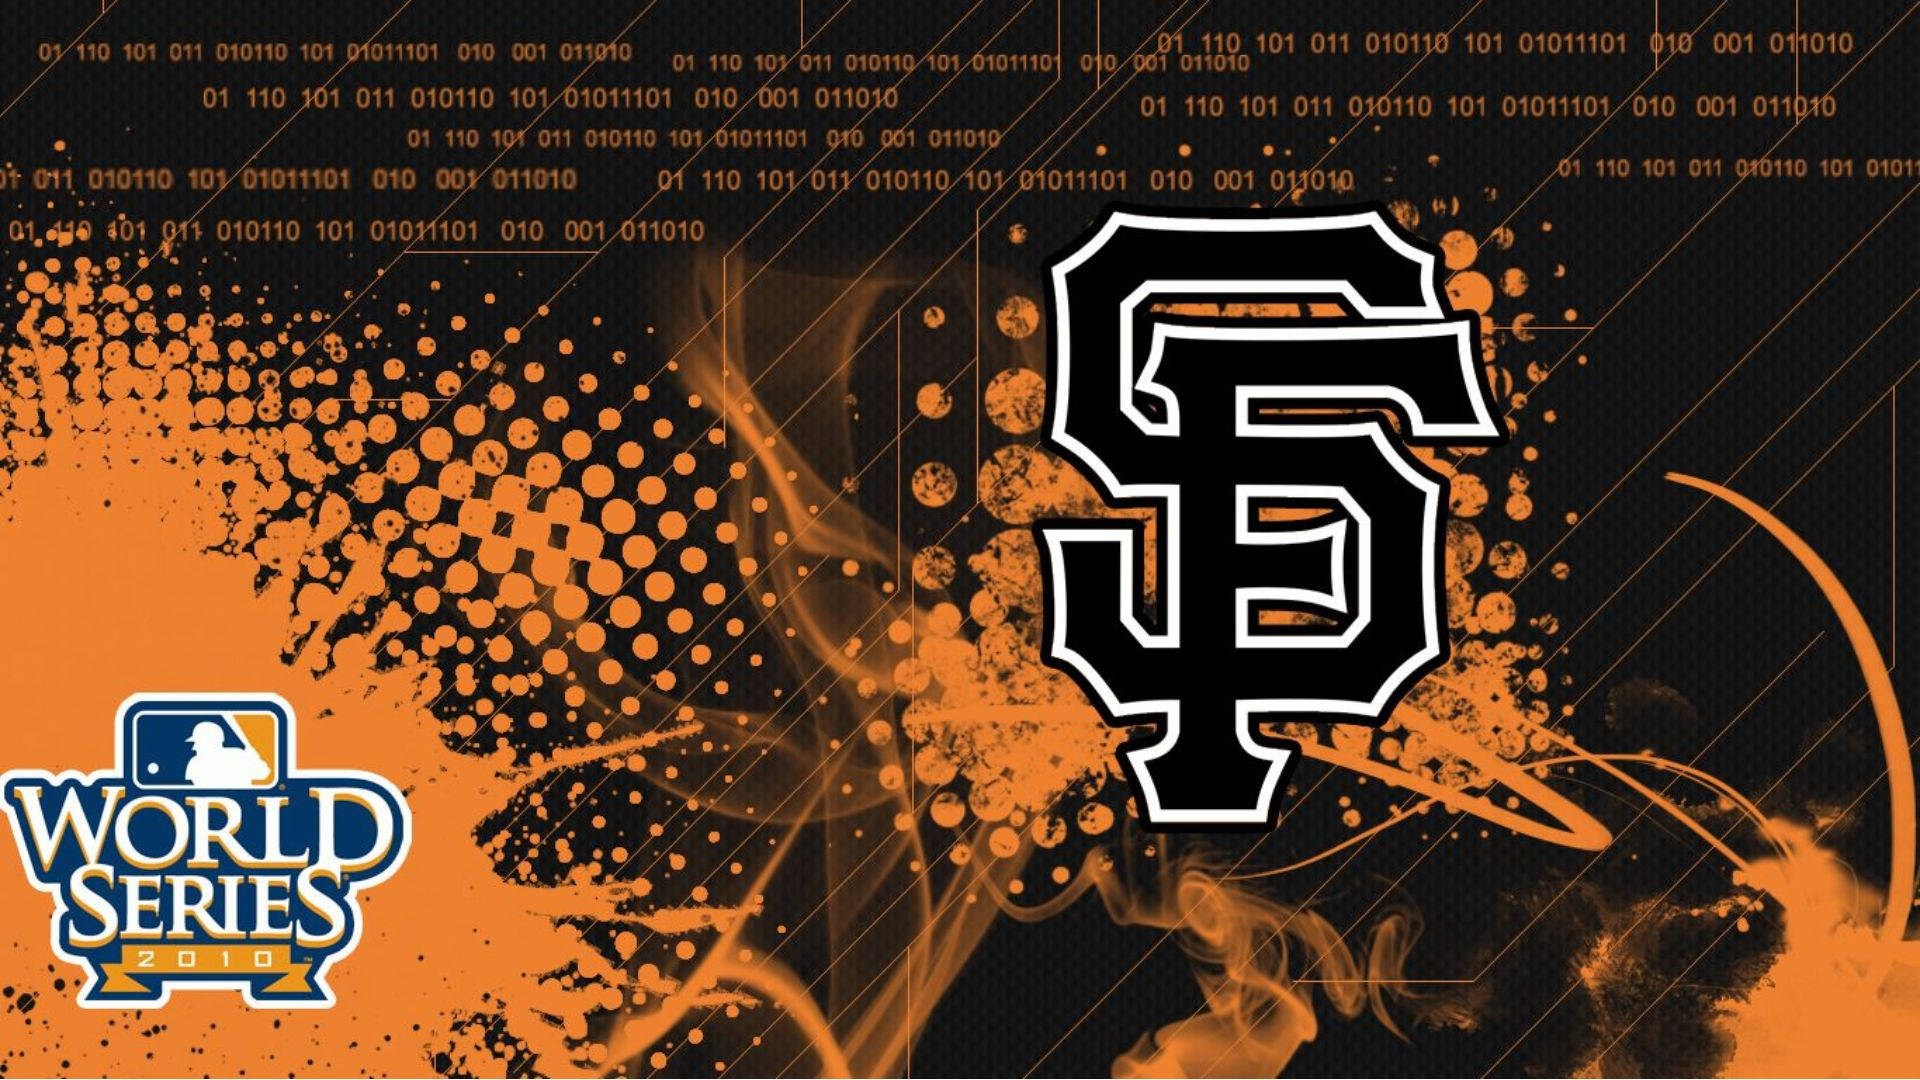 San Francisco Giants World Series 2010 Wallpaper